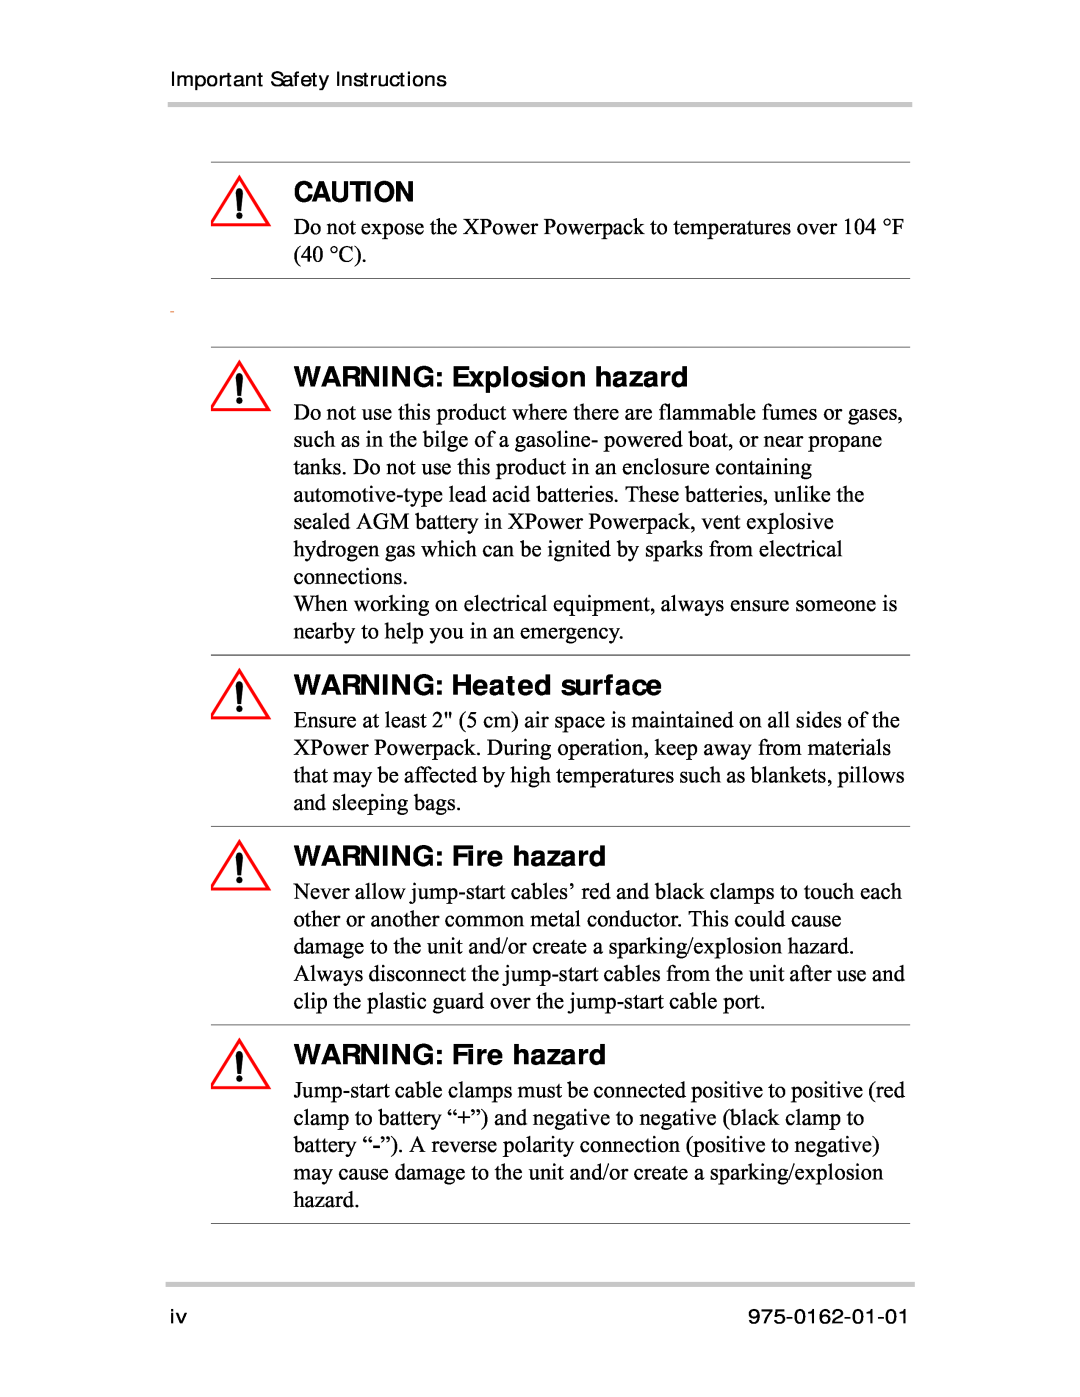 Xantrex Technology 400R manual WARNING Explosion hazard, WARNING Heated surface, WARNING Fire hazard 